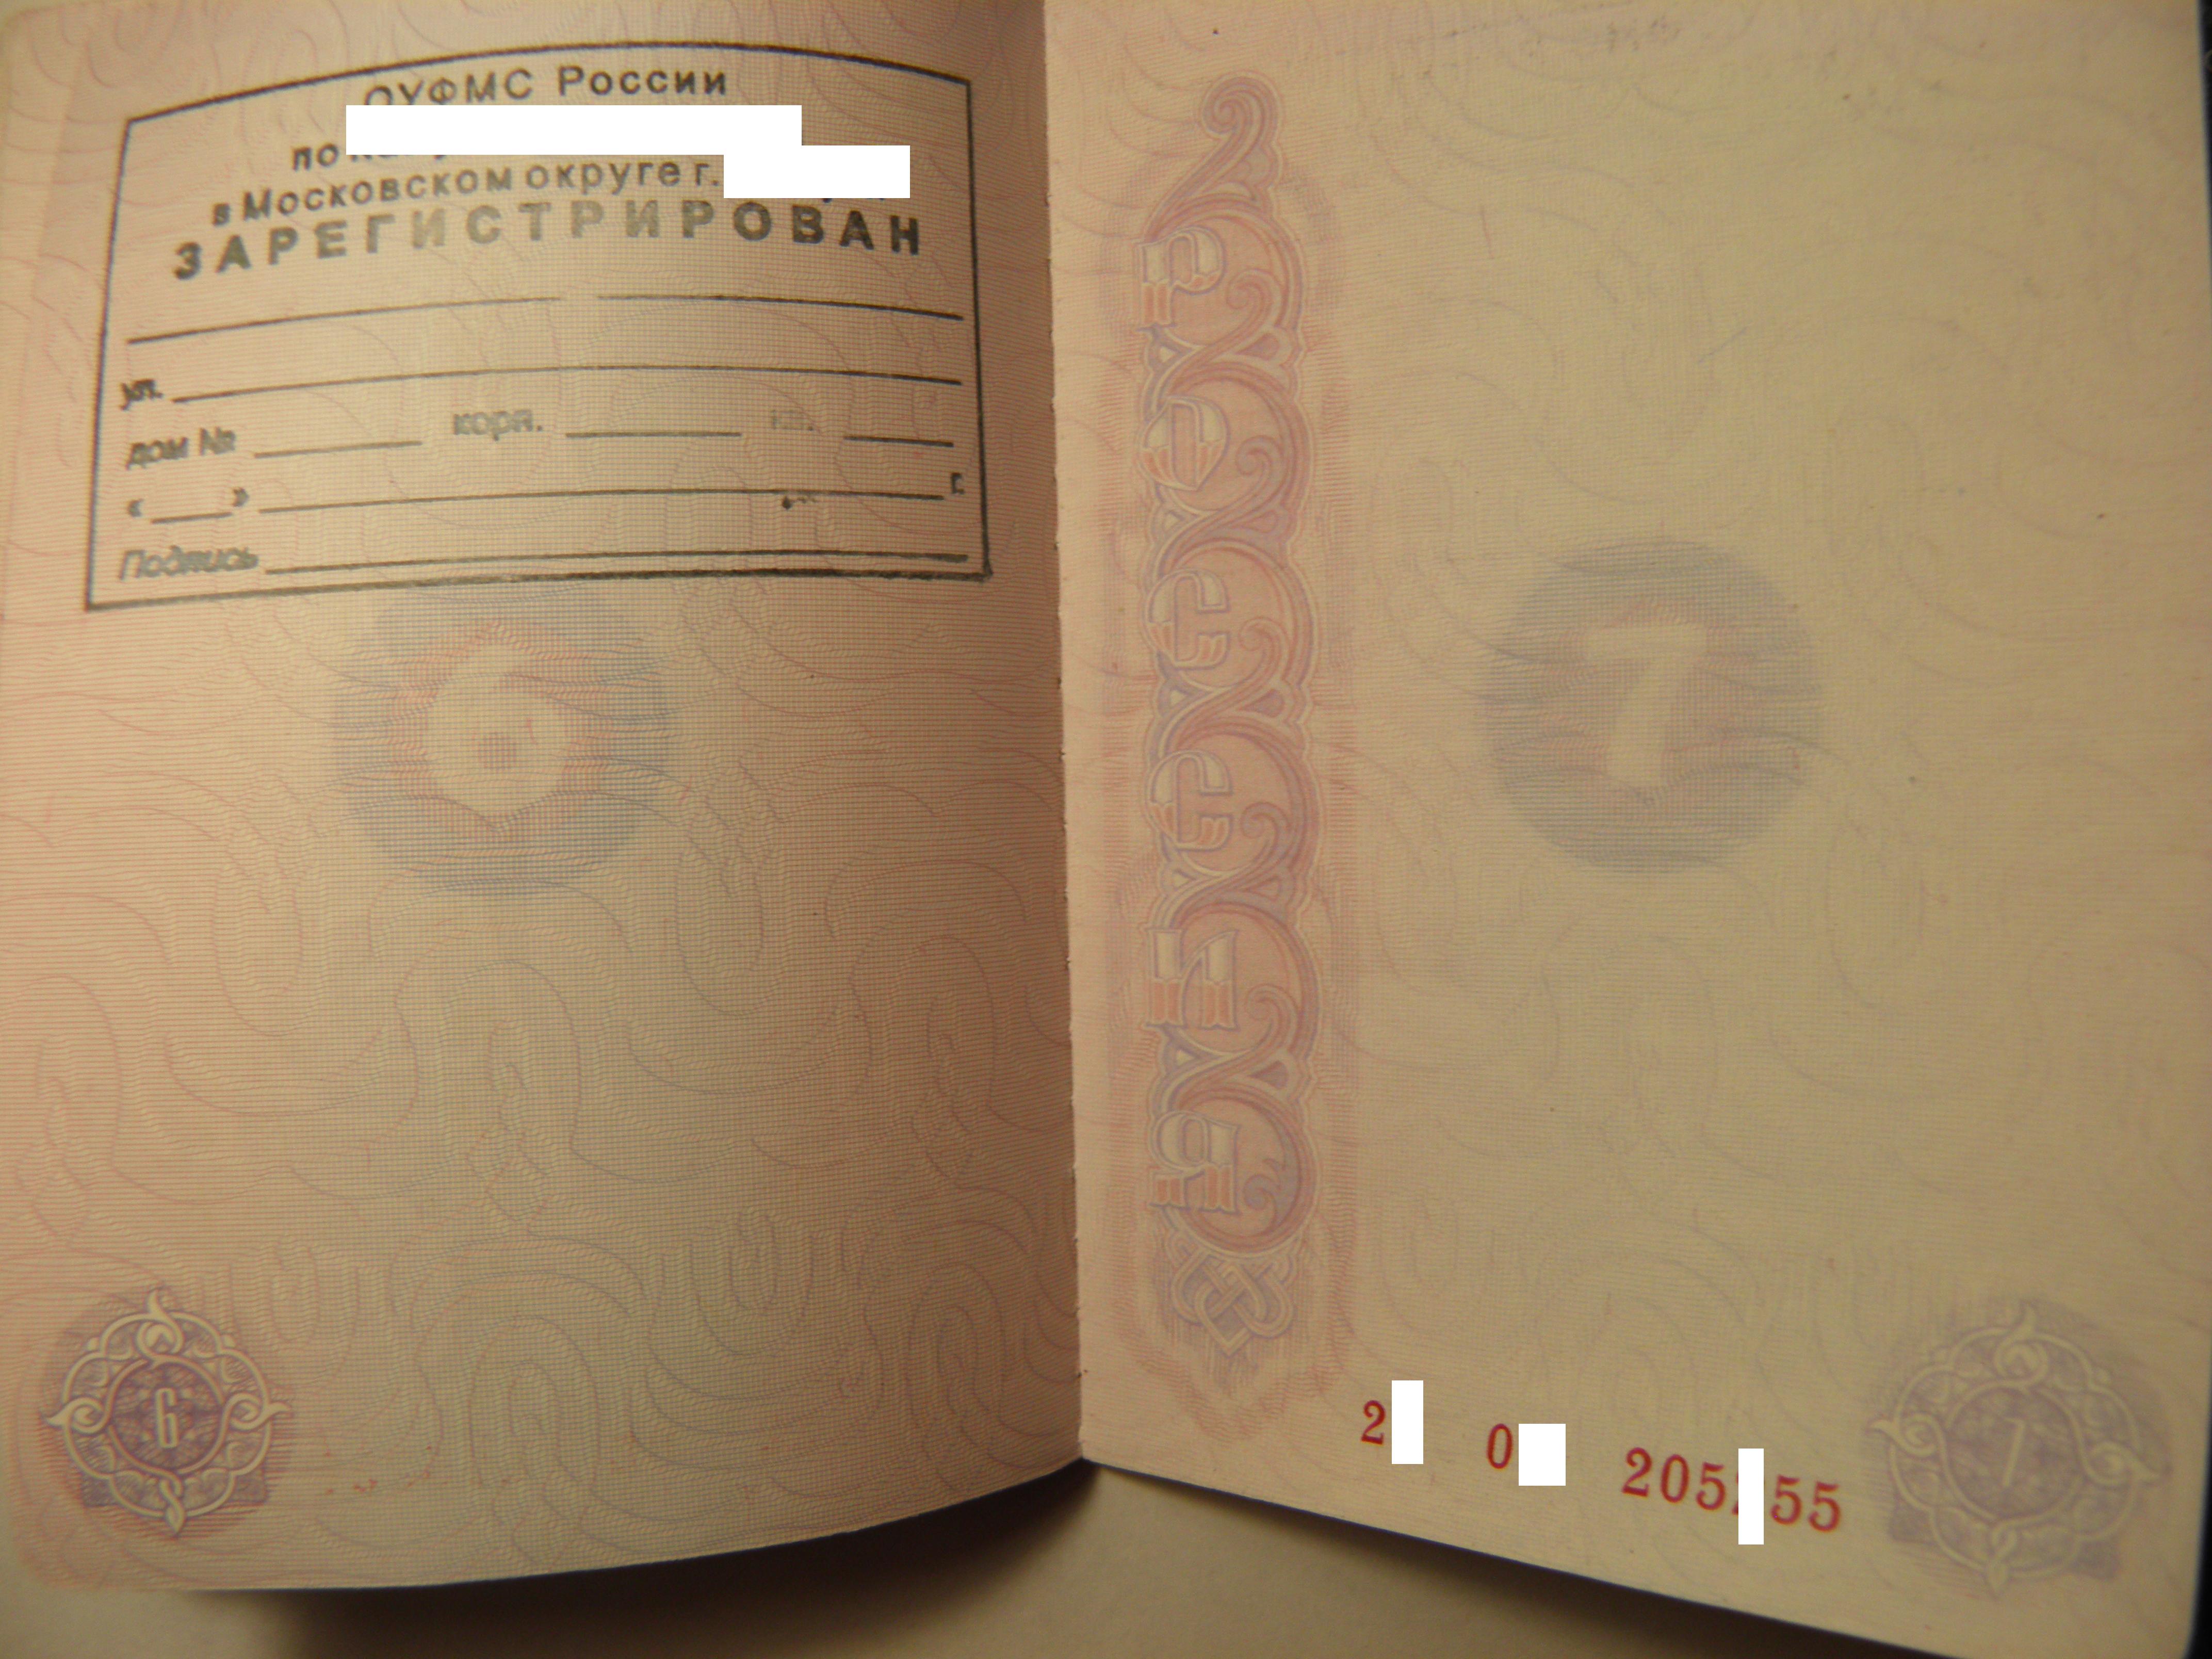 6-7 Страница паспорта РФ